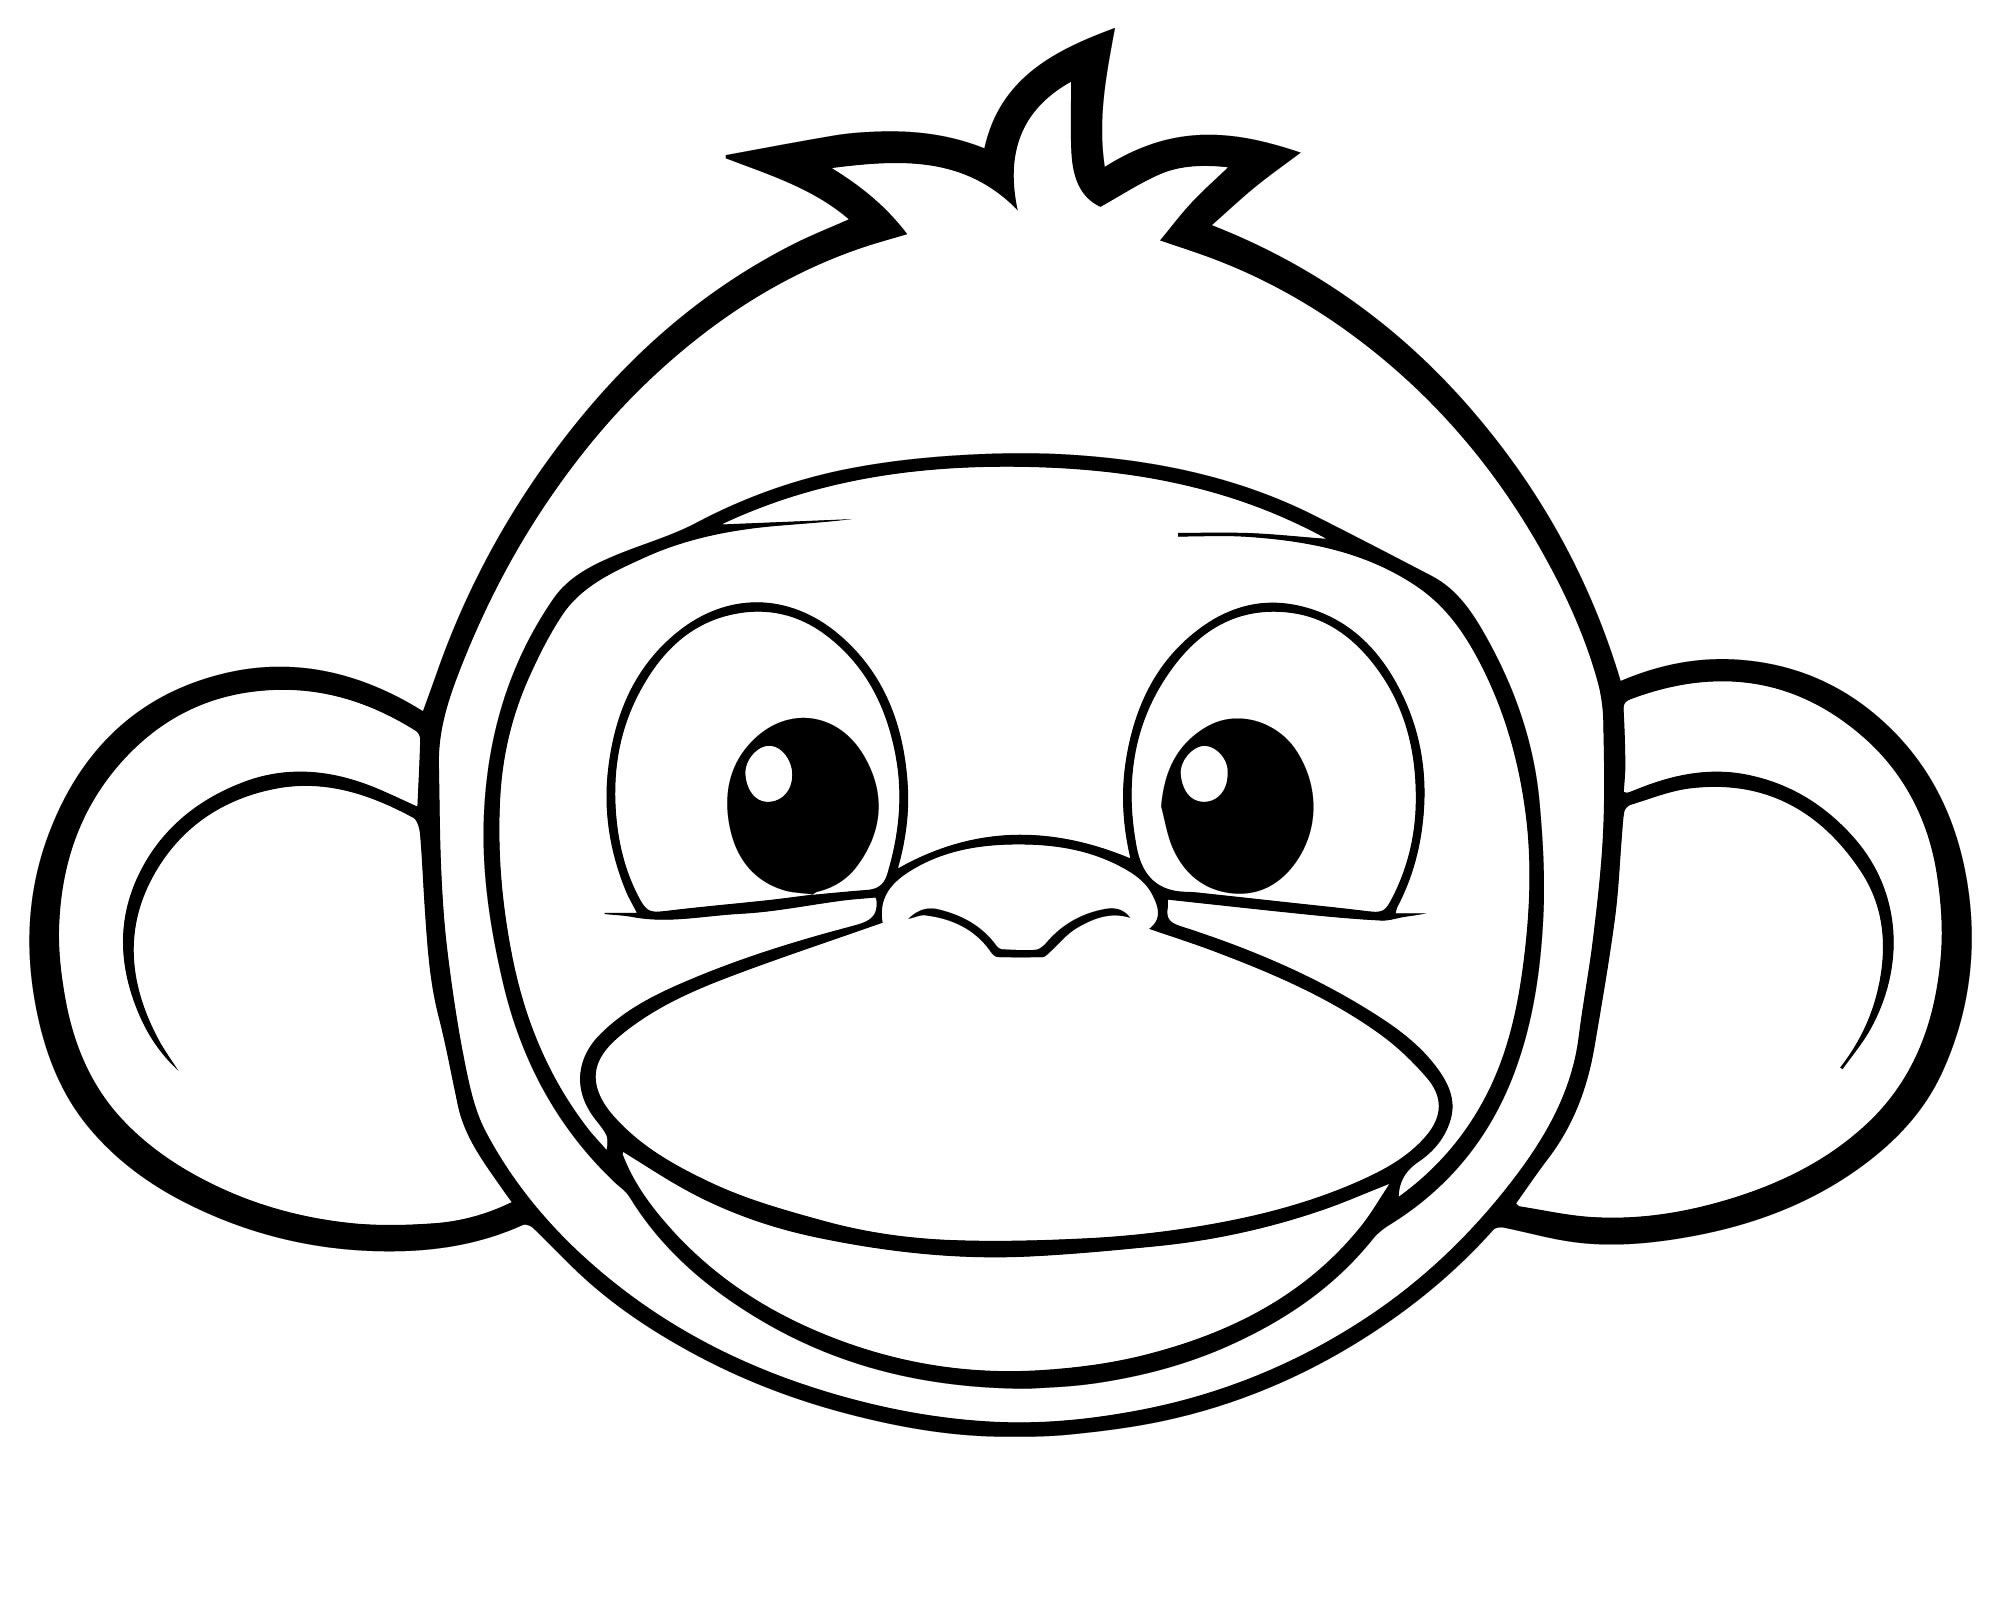 Раскраски обезьянки. Раскраска обезьяна для детей